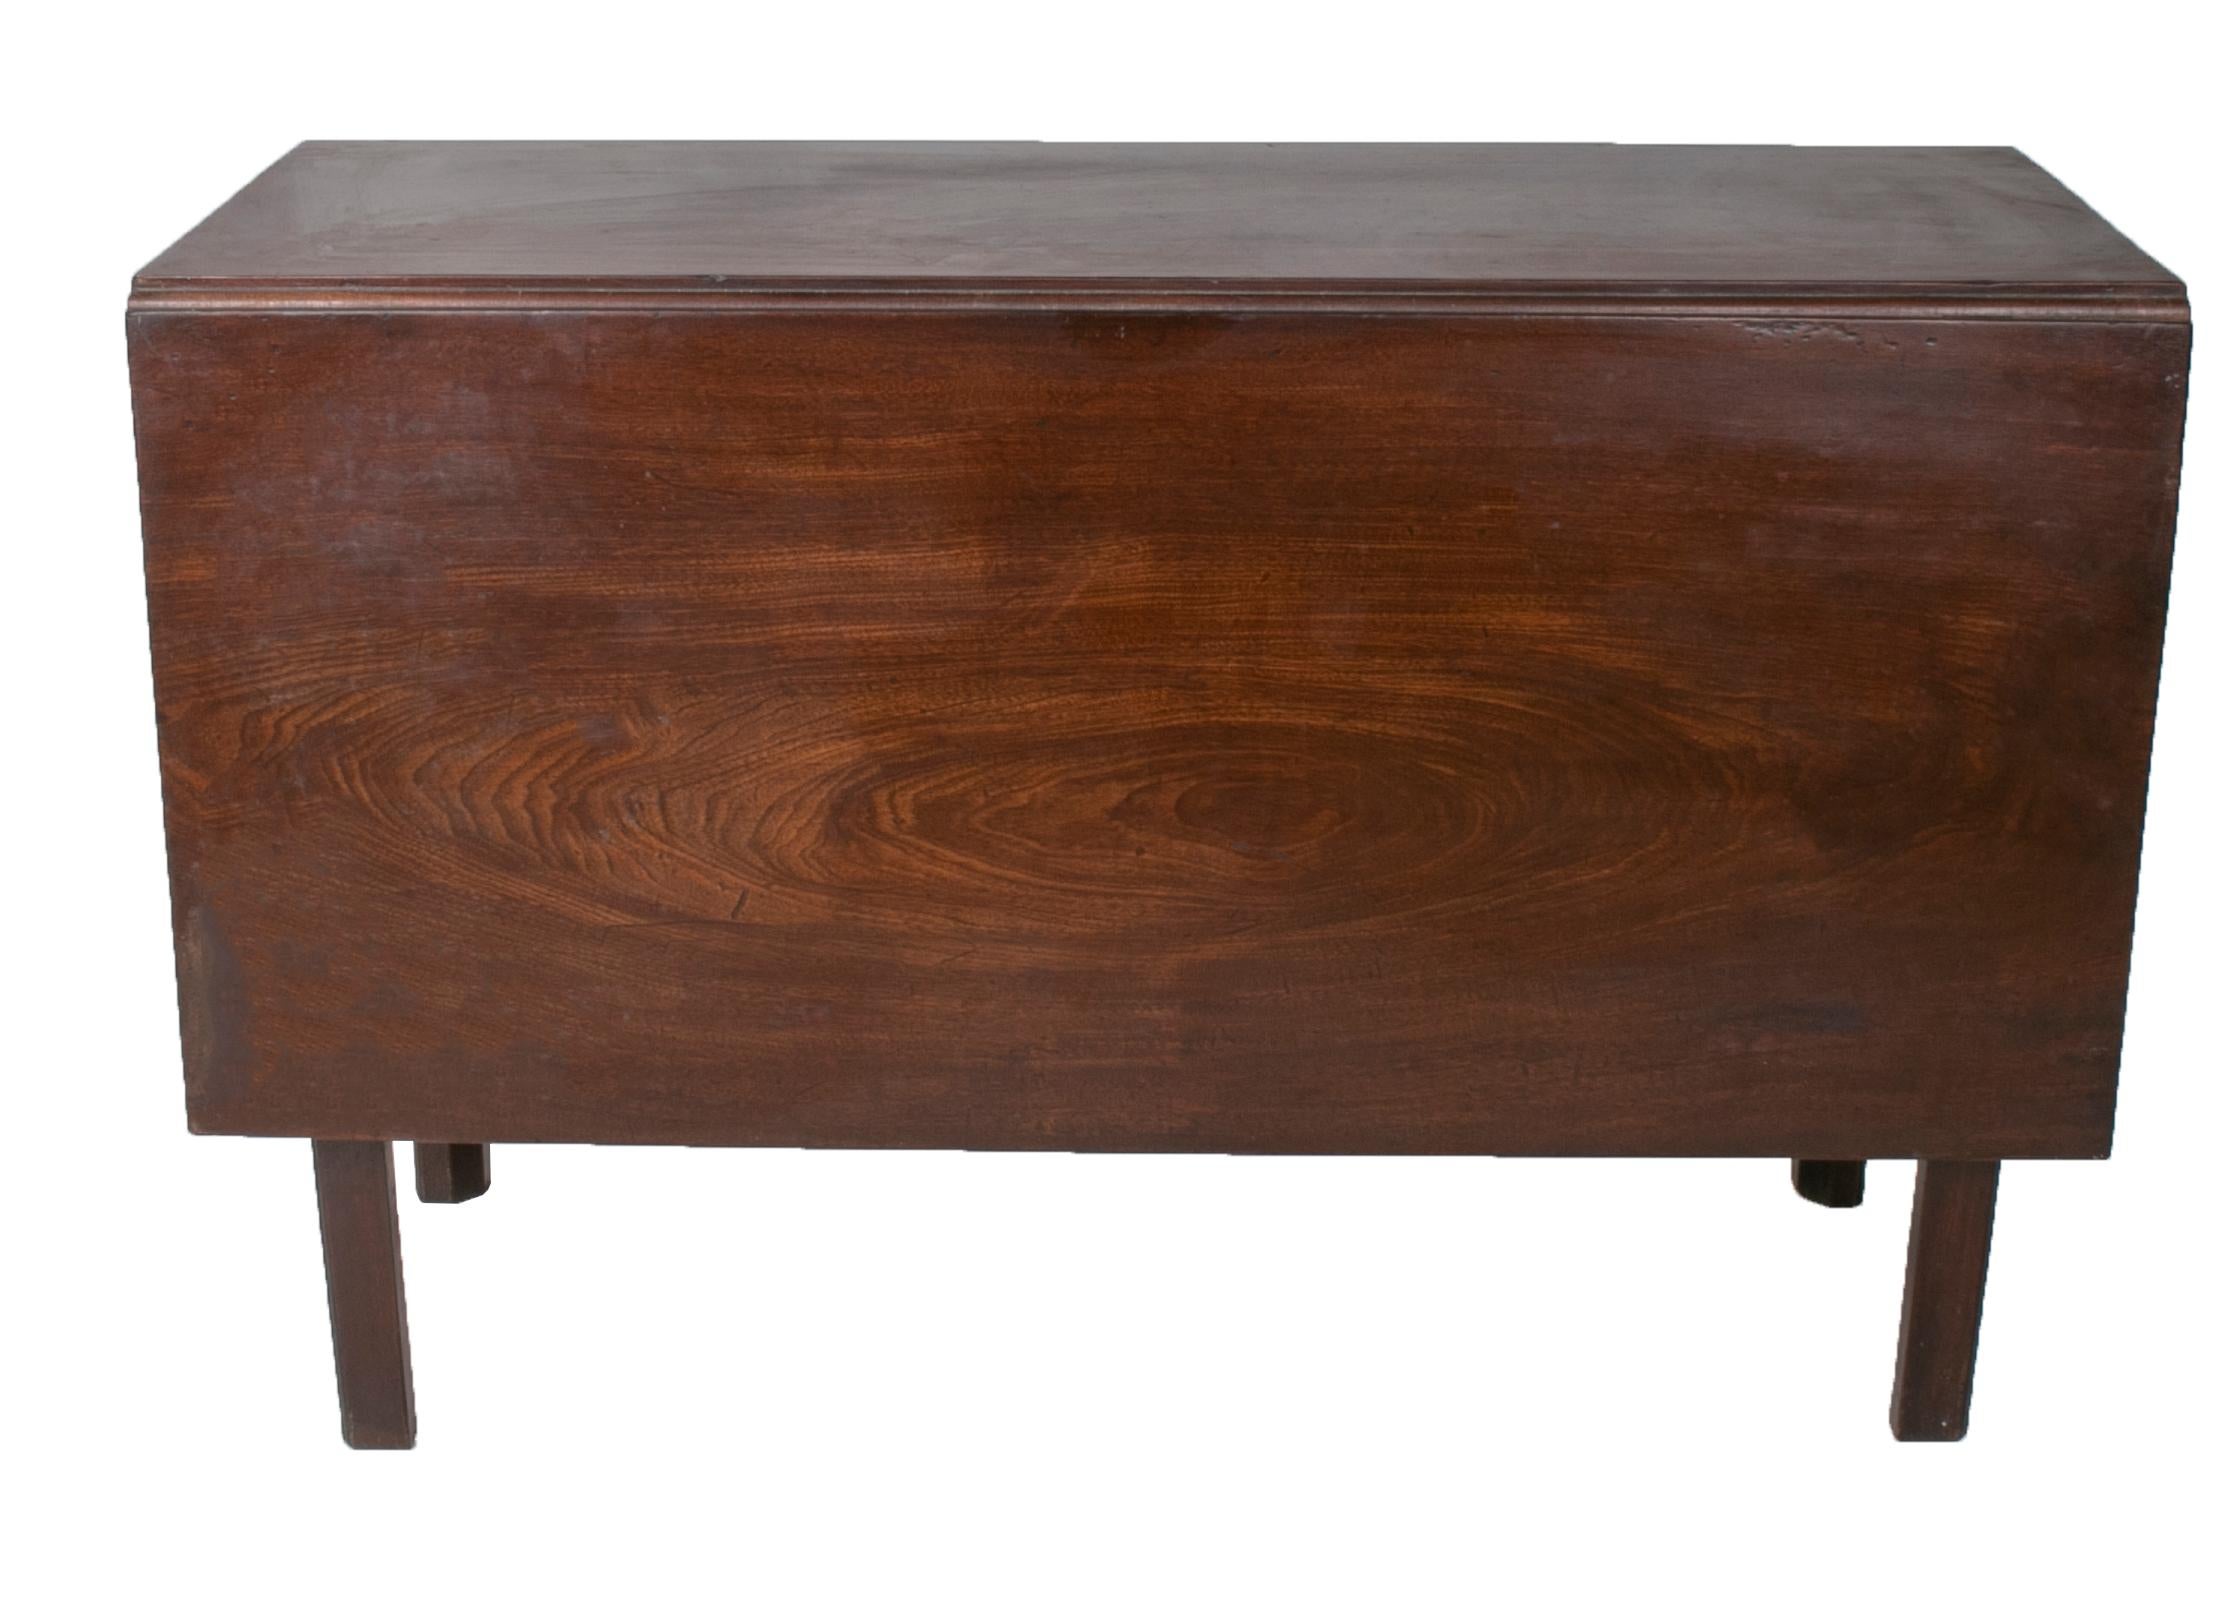 19th century English mahogany folding table.

Extended dimensions: 71.5 x 134 x 106cm.